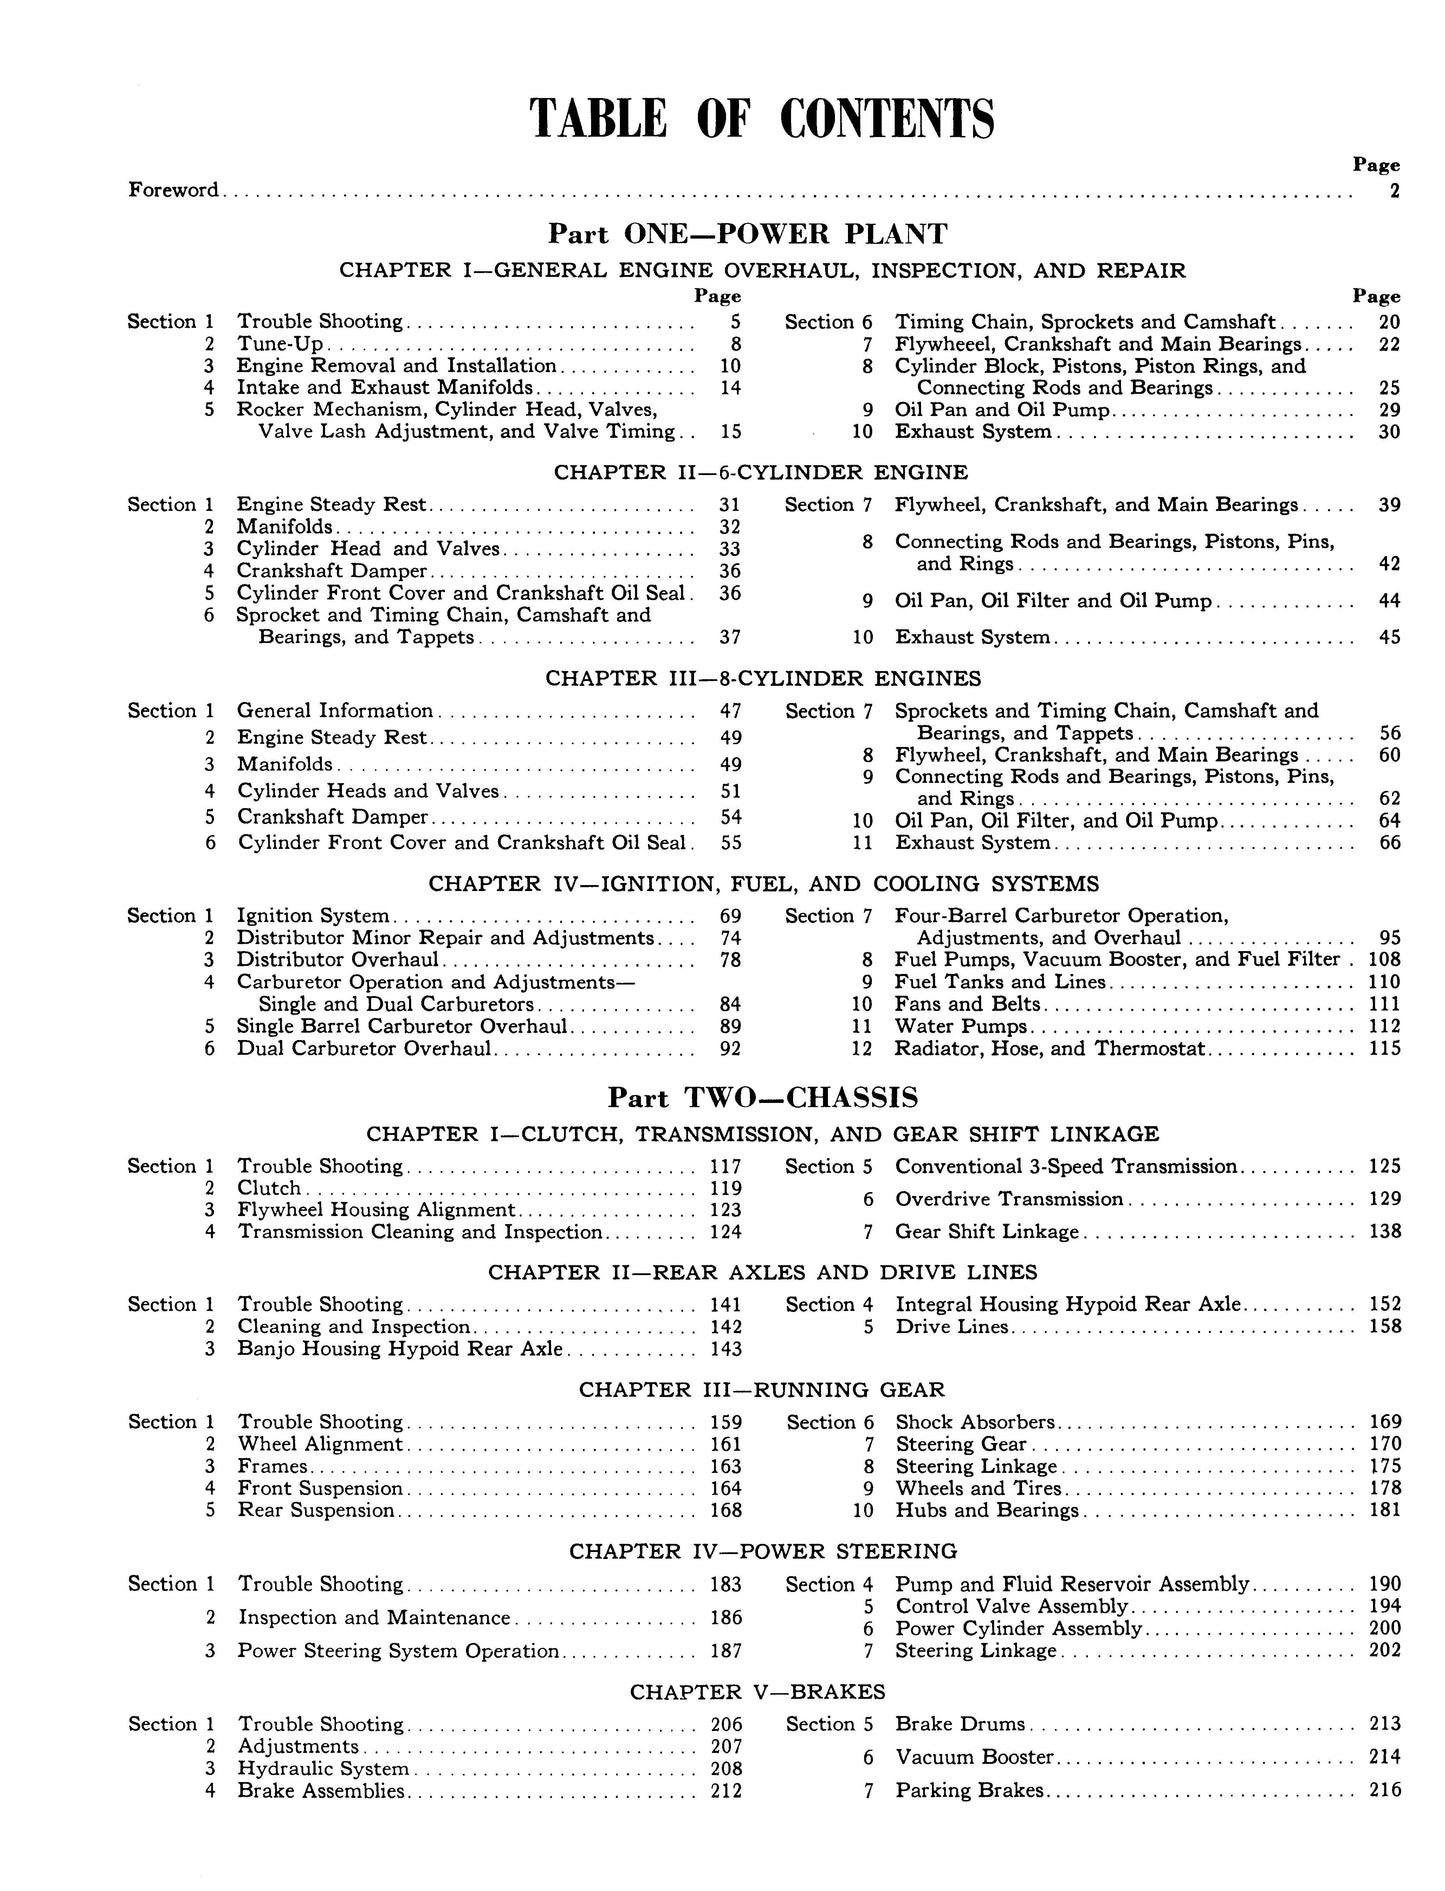 1956 Ford Shop Manual - All Models